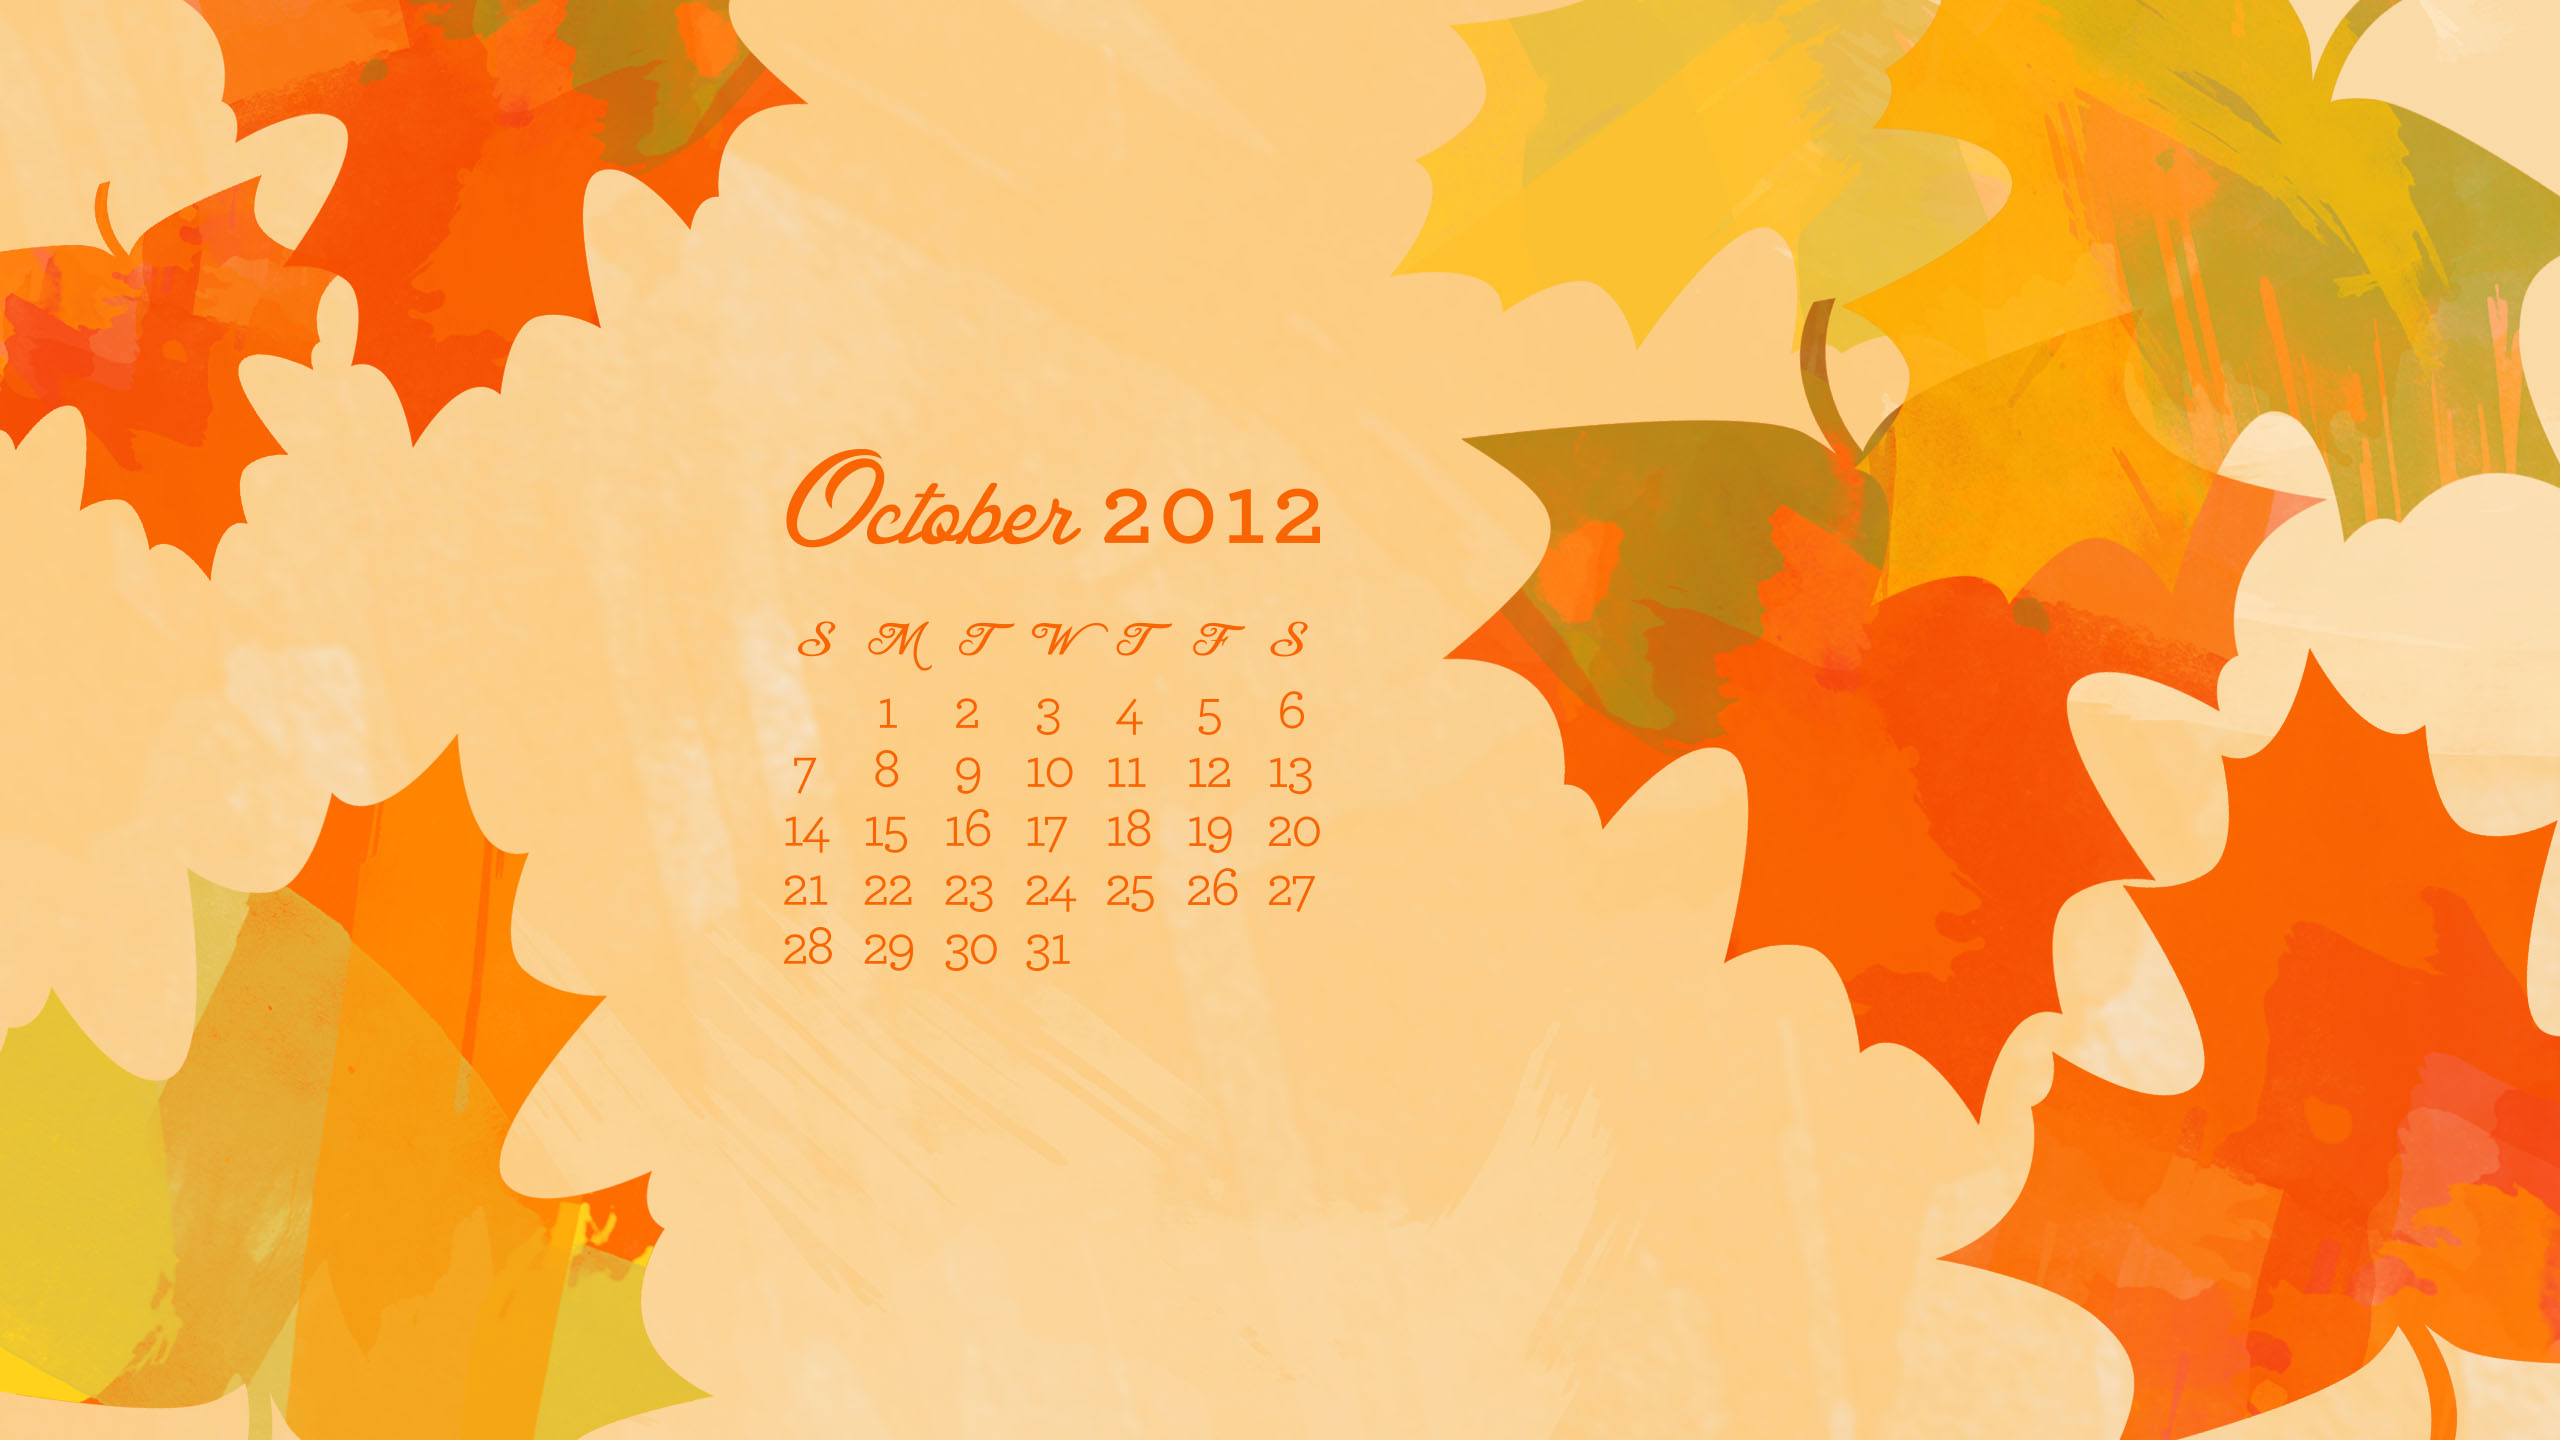 October 2012 Desktop, iPhone & iPad Calendar Wallpaper ...